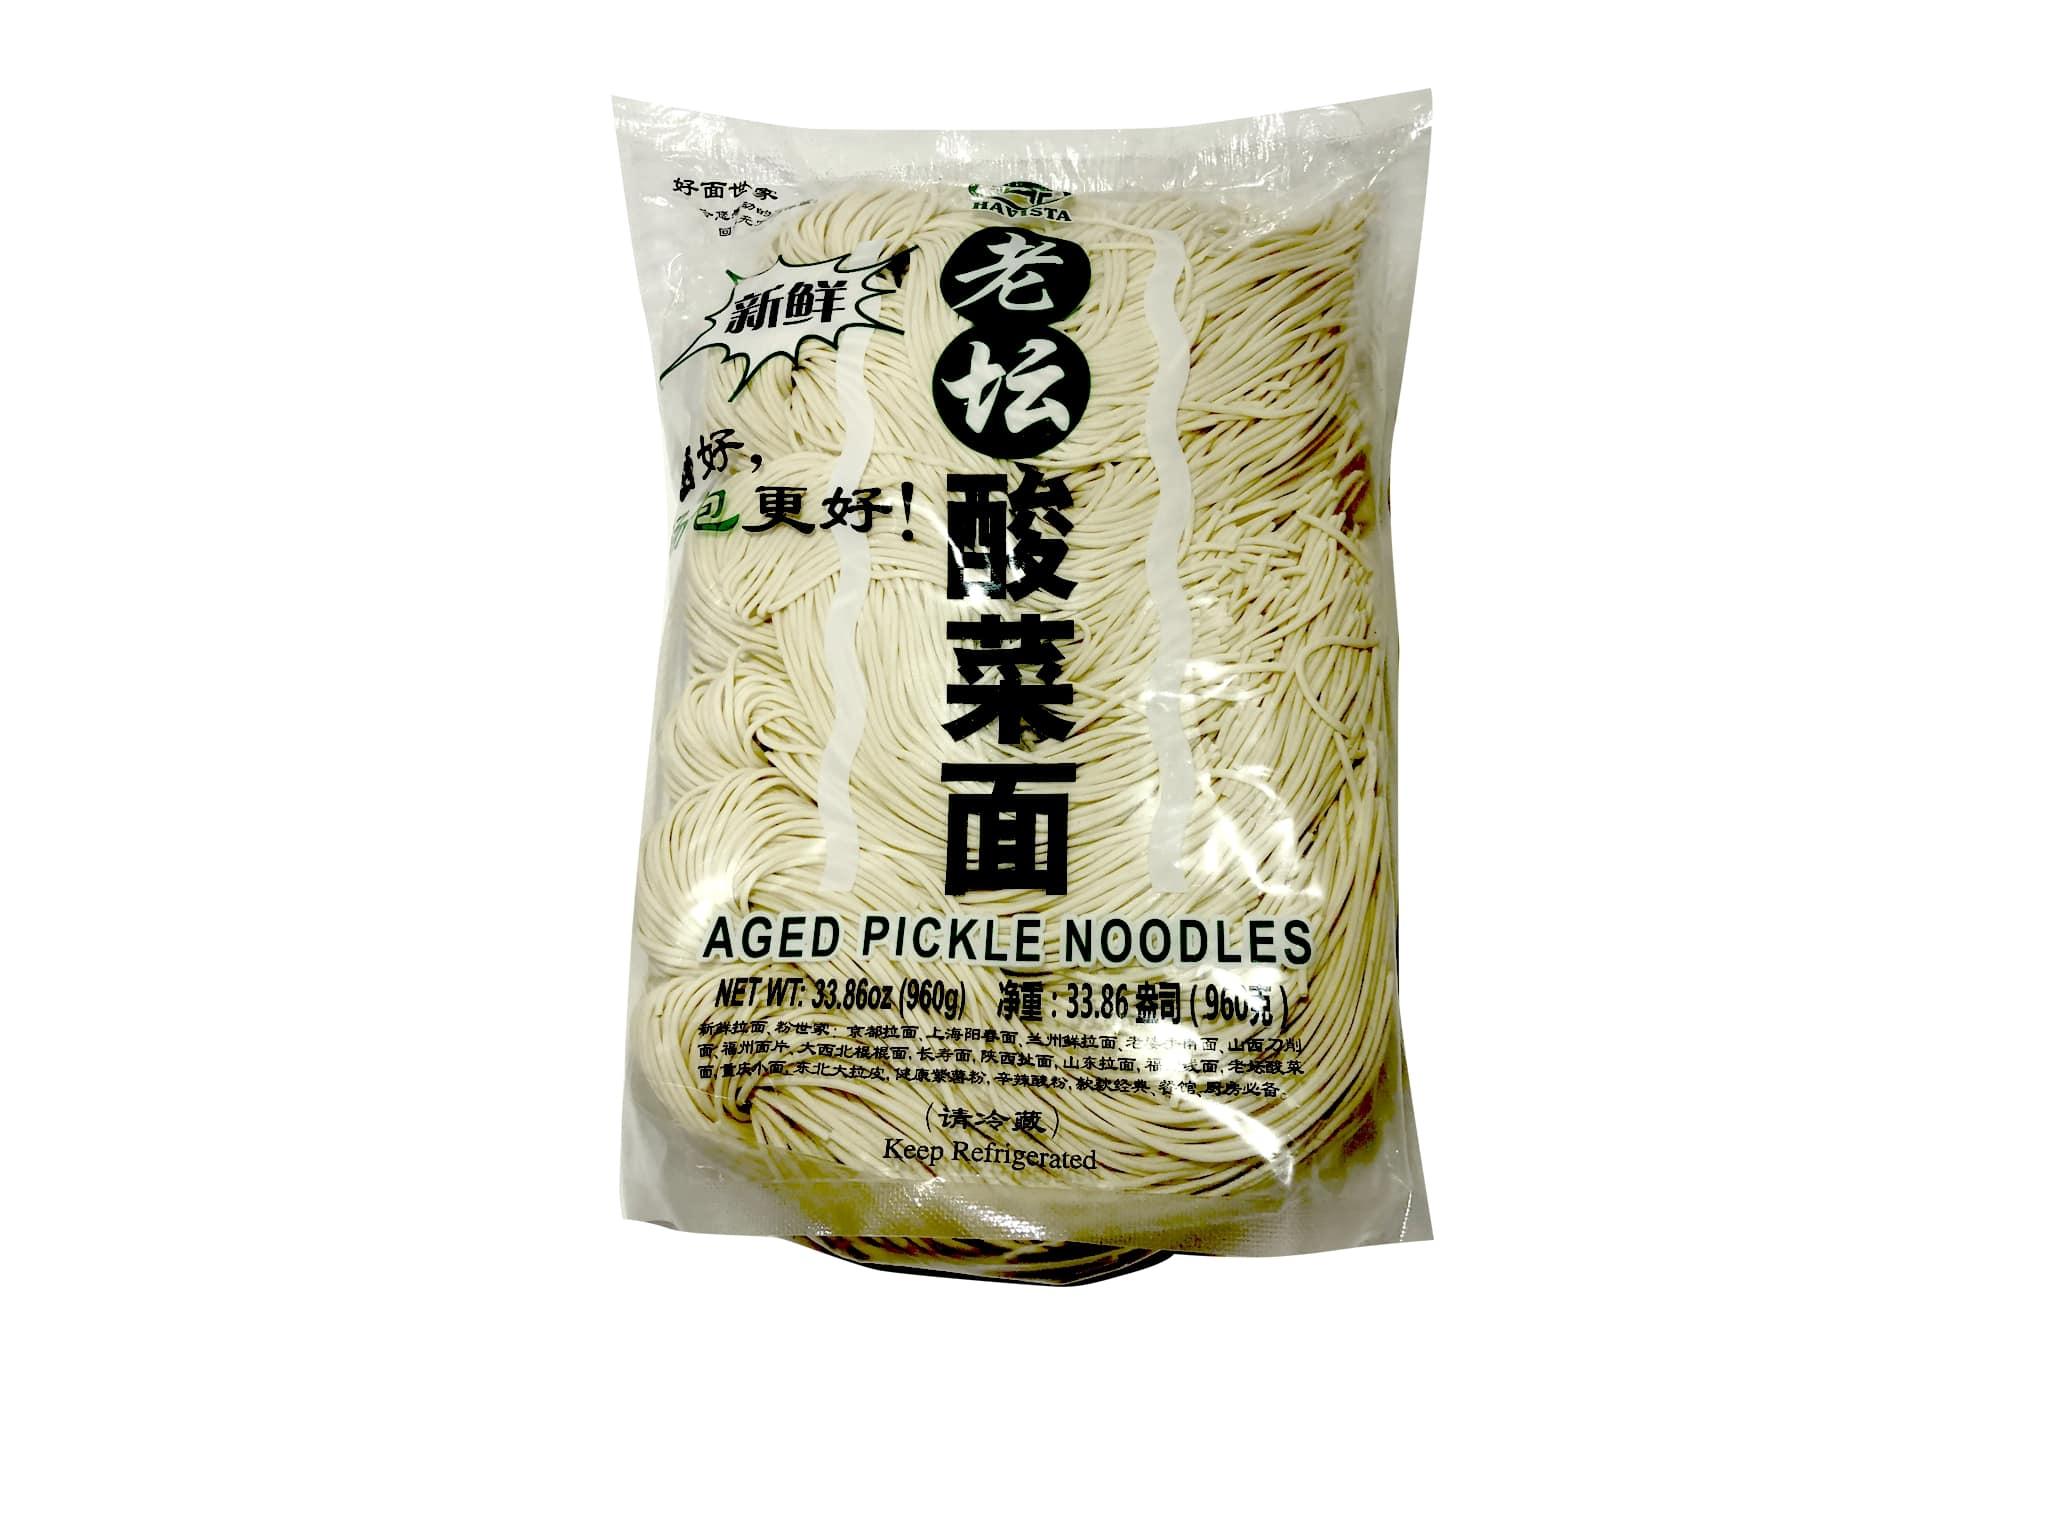 havista-aged-pickle-noodles-refrigerated